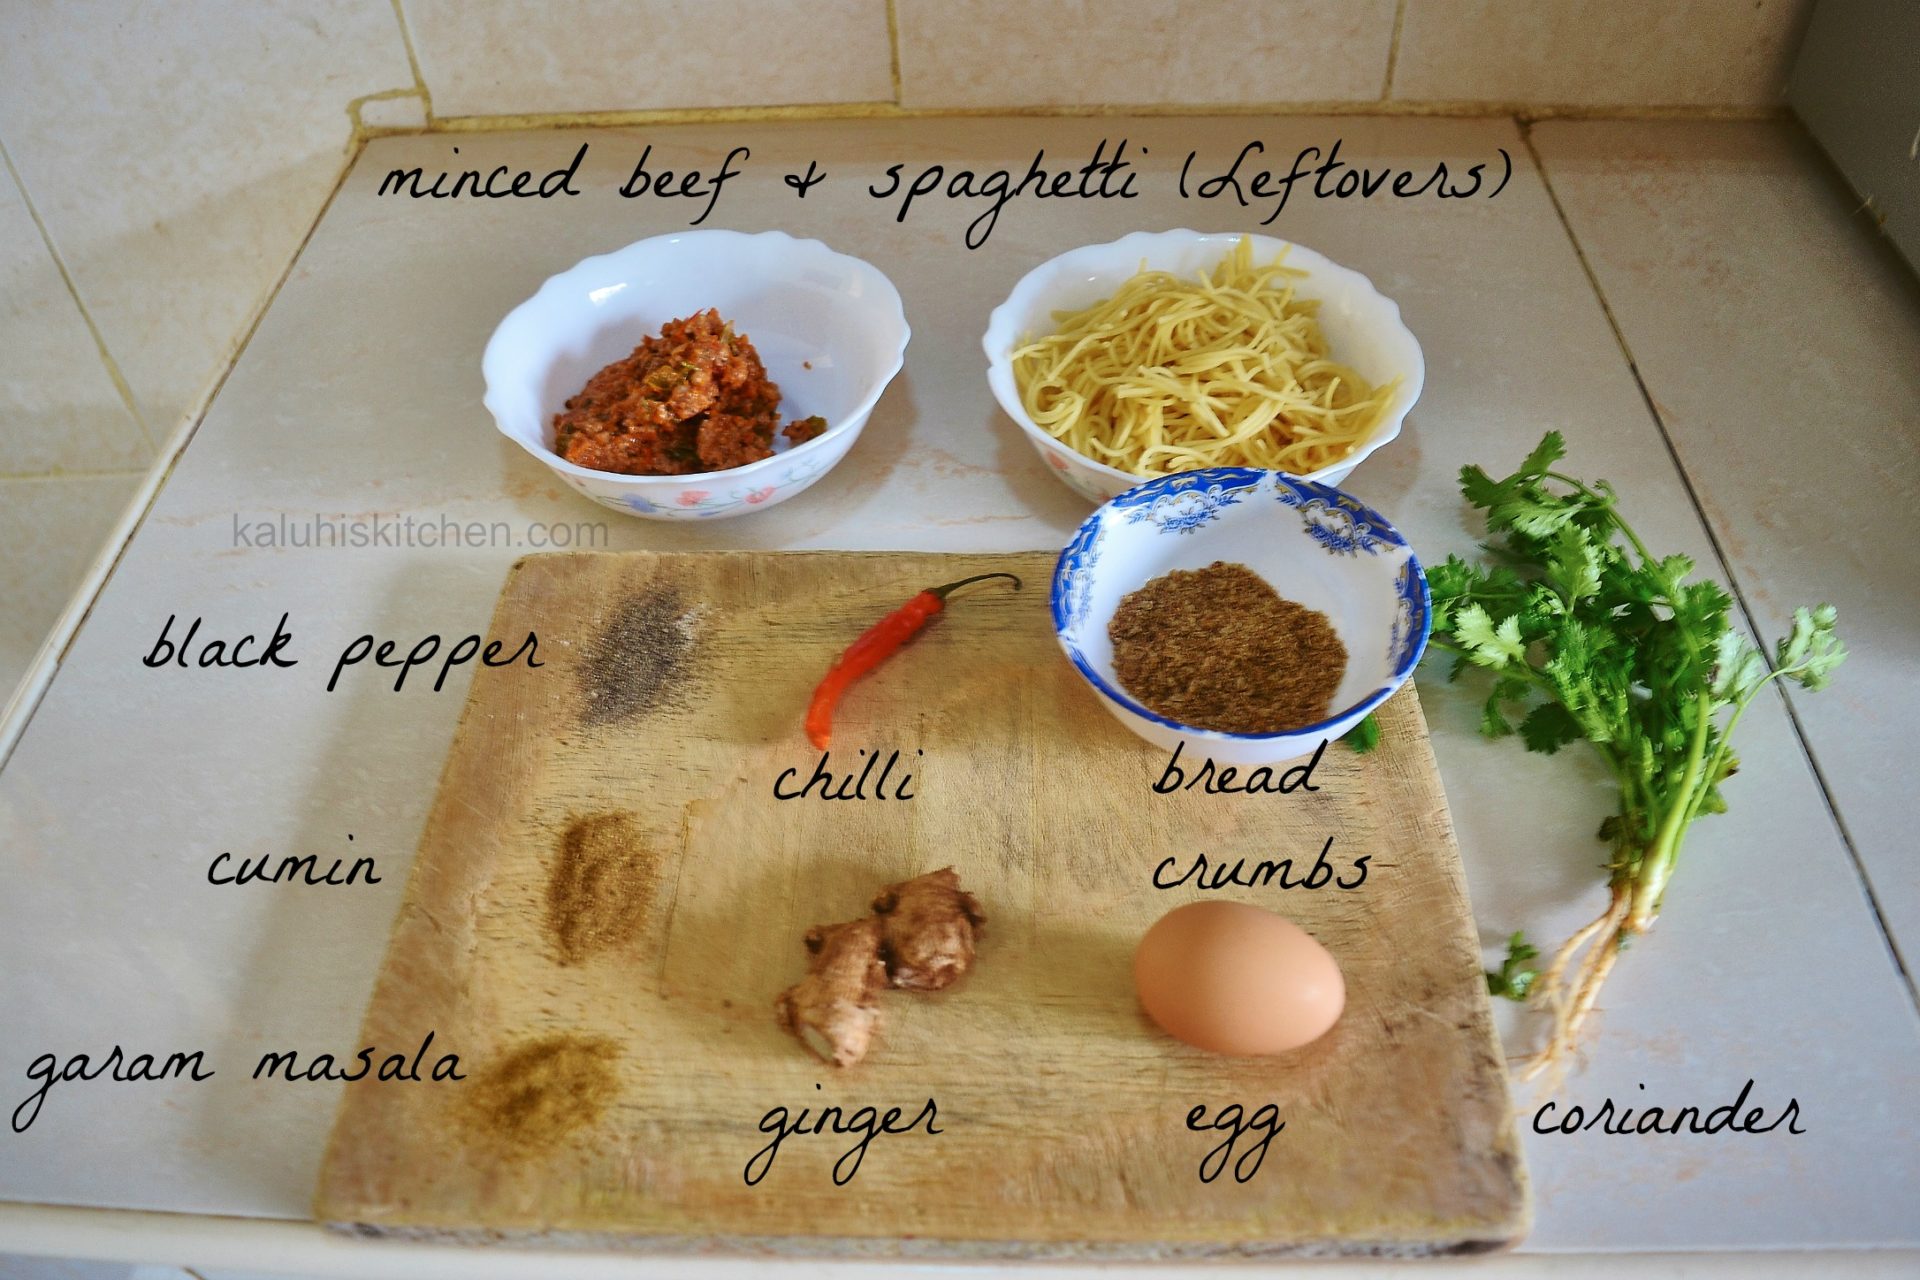 chilli and ginger spaghetti fritter ingredientsrecipe developed by kaluhi adagala of kaluhiskitchen.com